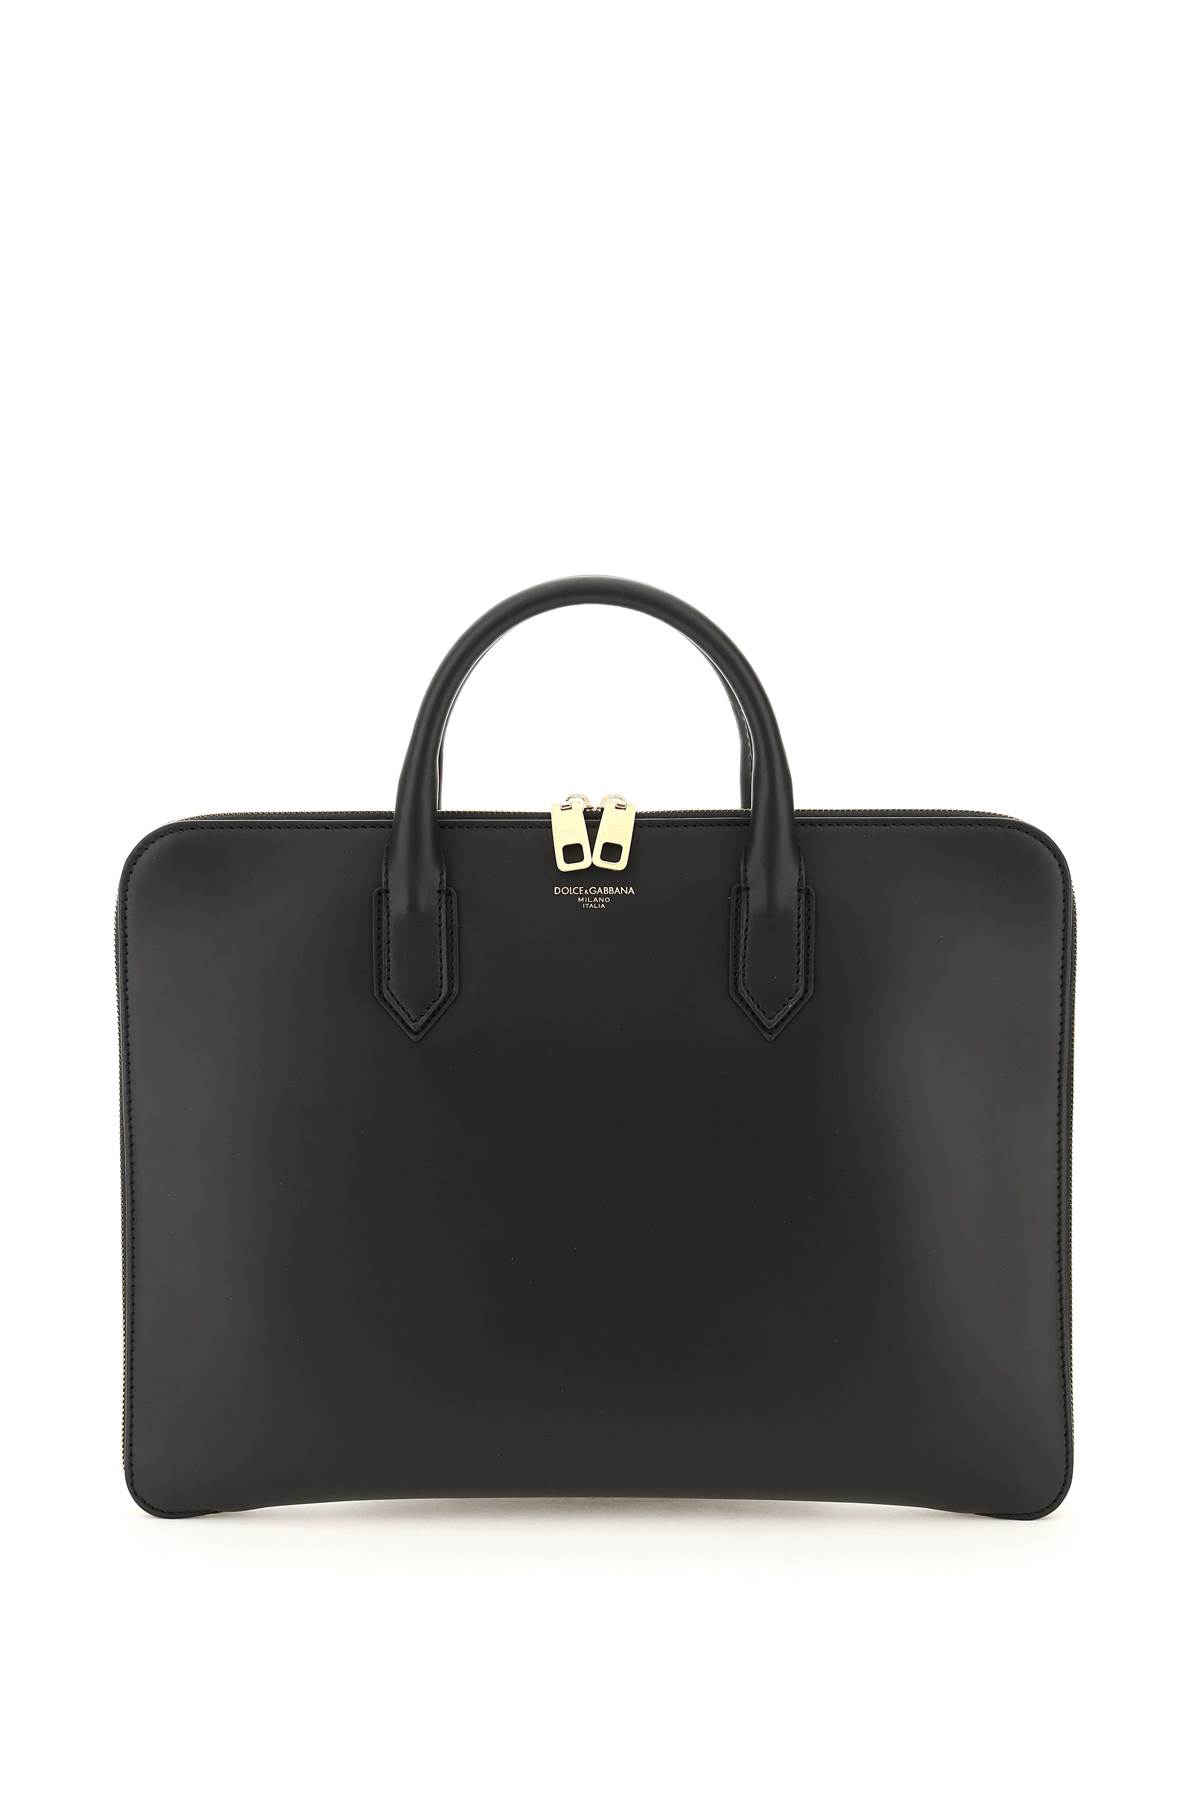 Dolce & Gabbana Leather Monreale Briefcase